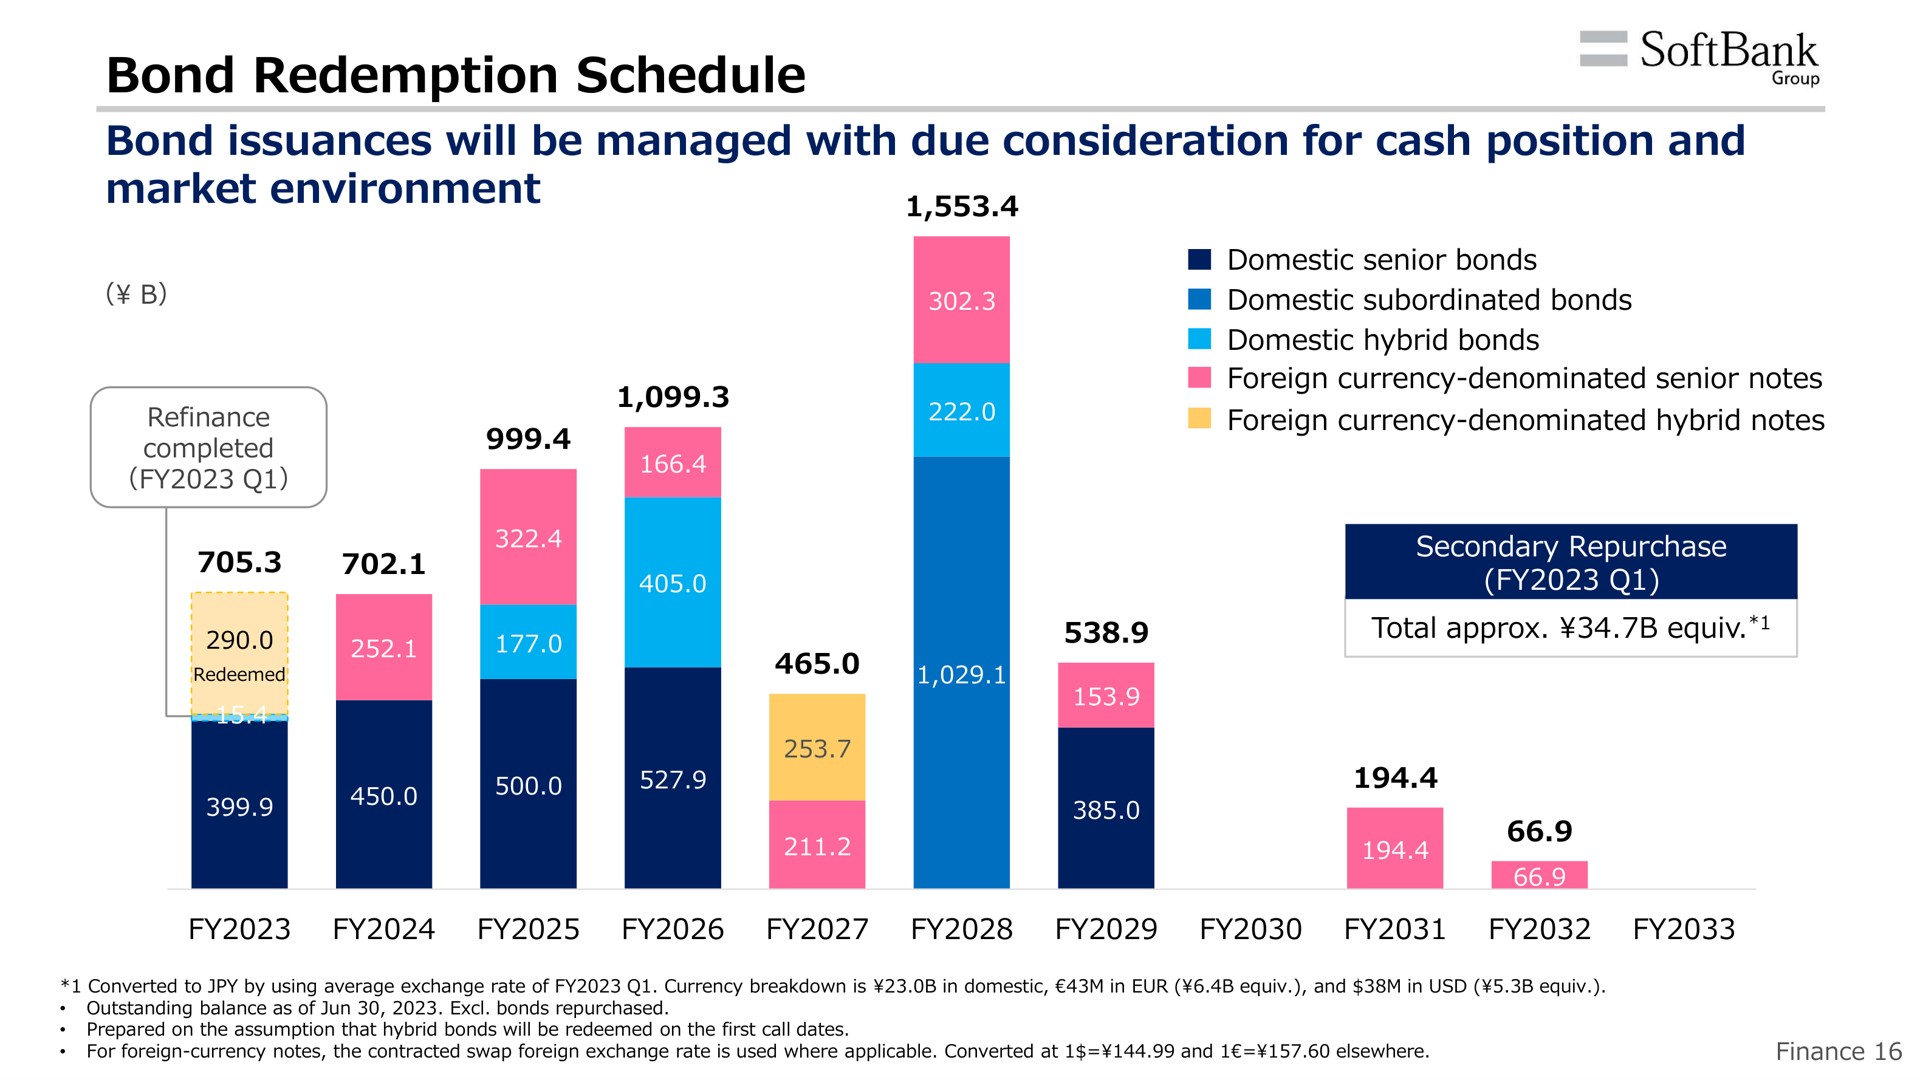 bond redemption schedule market environment group | SoftBank